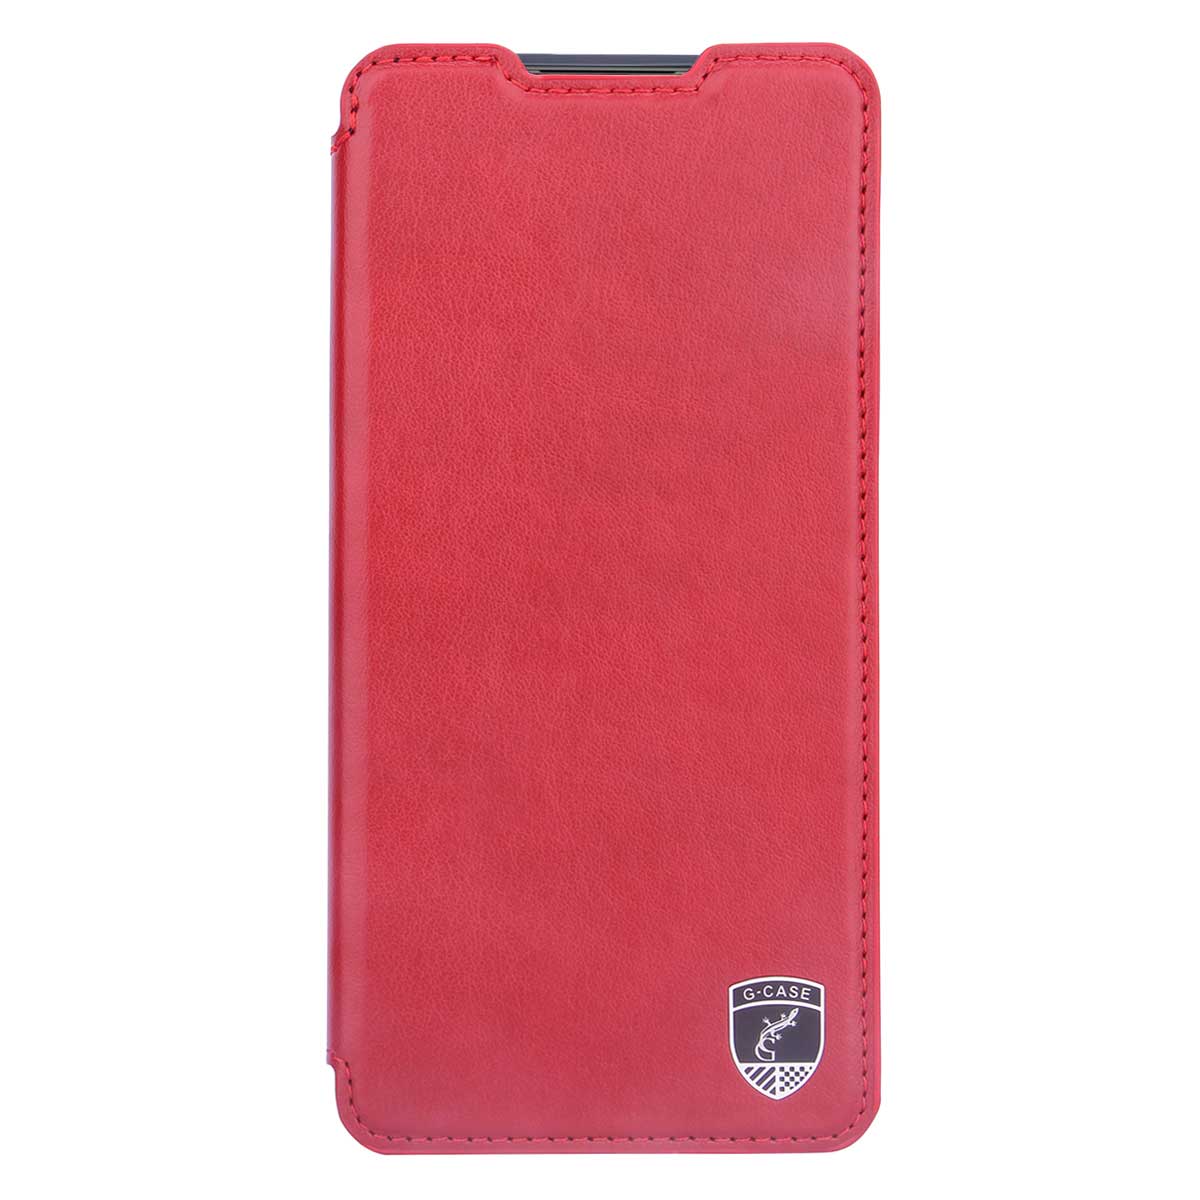 Чехол G-Case для Samsung Galaxy A72 SM-A725F Slim Premium Red GG-1358 чехол g case для realme c21 c20 slim premium black gg 1436